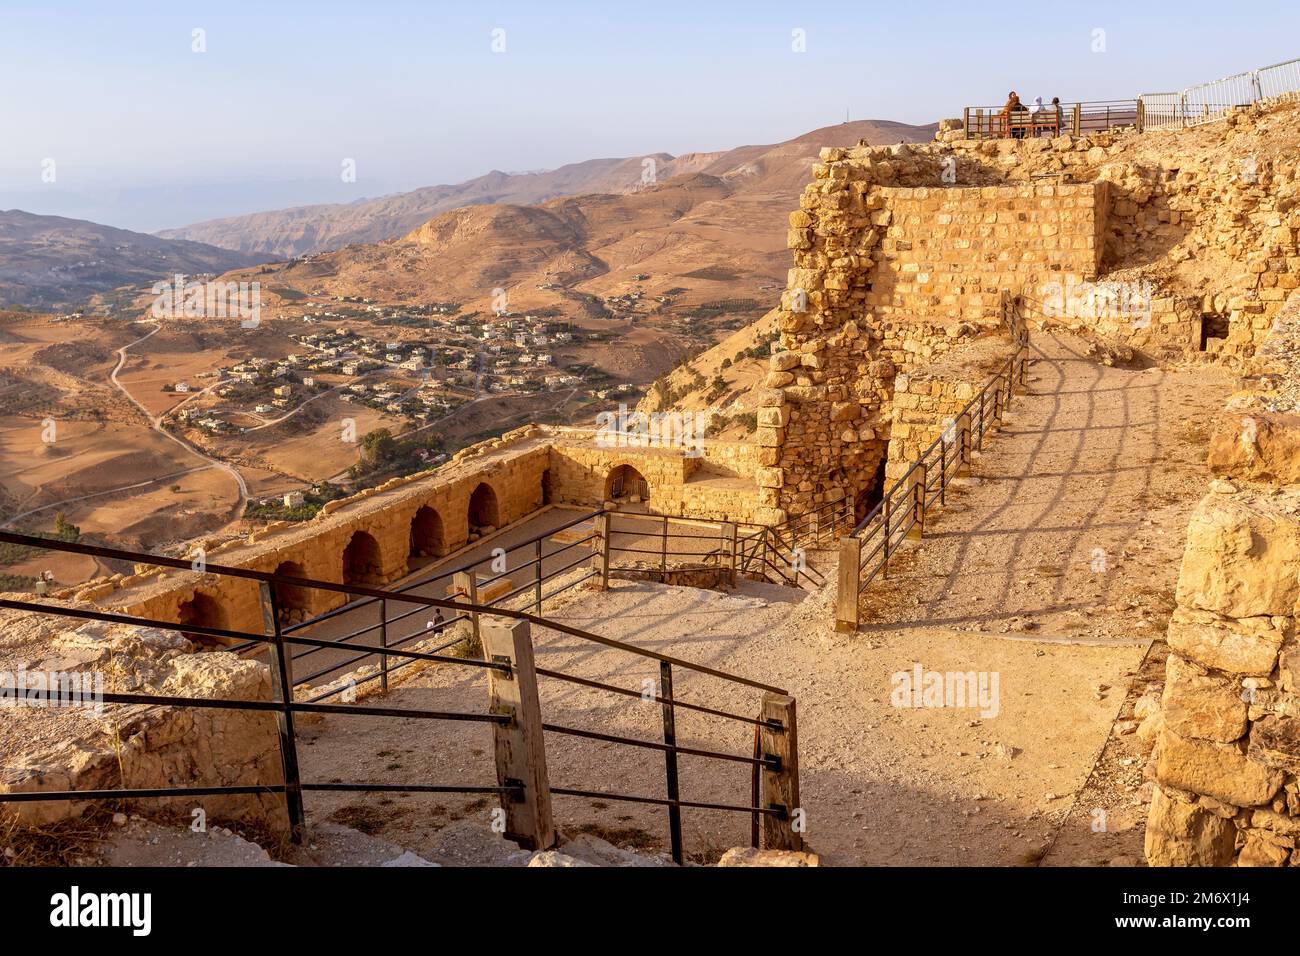 Medieval Crusaders Castle in Al Karak, Jordan Stock Photo - Alamy